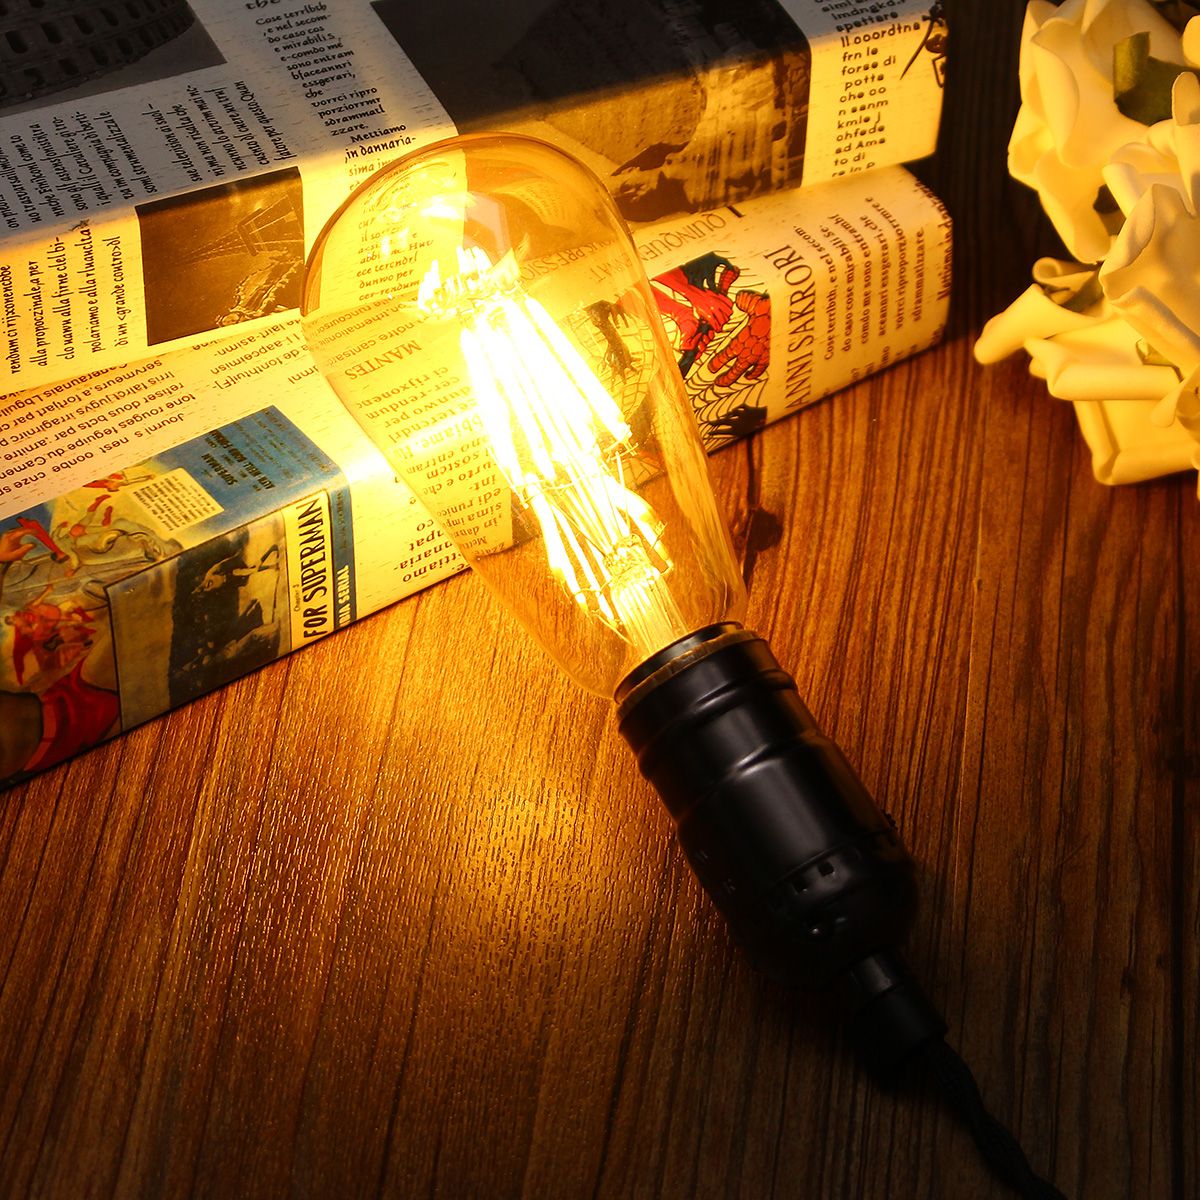 E27-ST64-8W-Golden-Cover-Dimmable-Edison-Retro-Vintage-Filament-COB-LED-Bulb-Light-Lamp-AC110220V-1113825